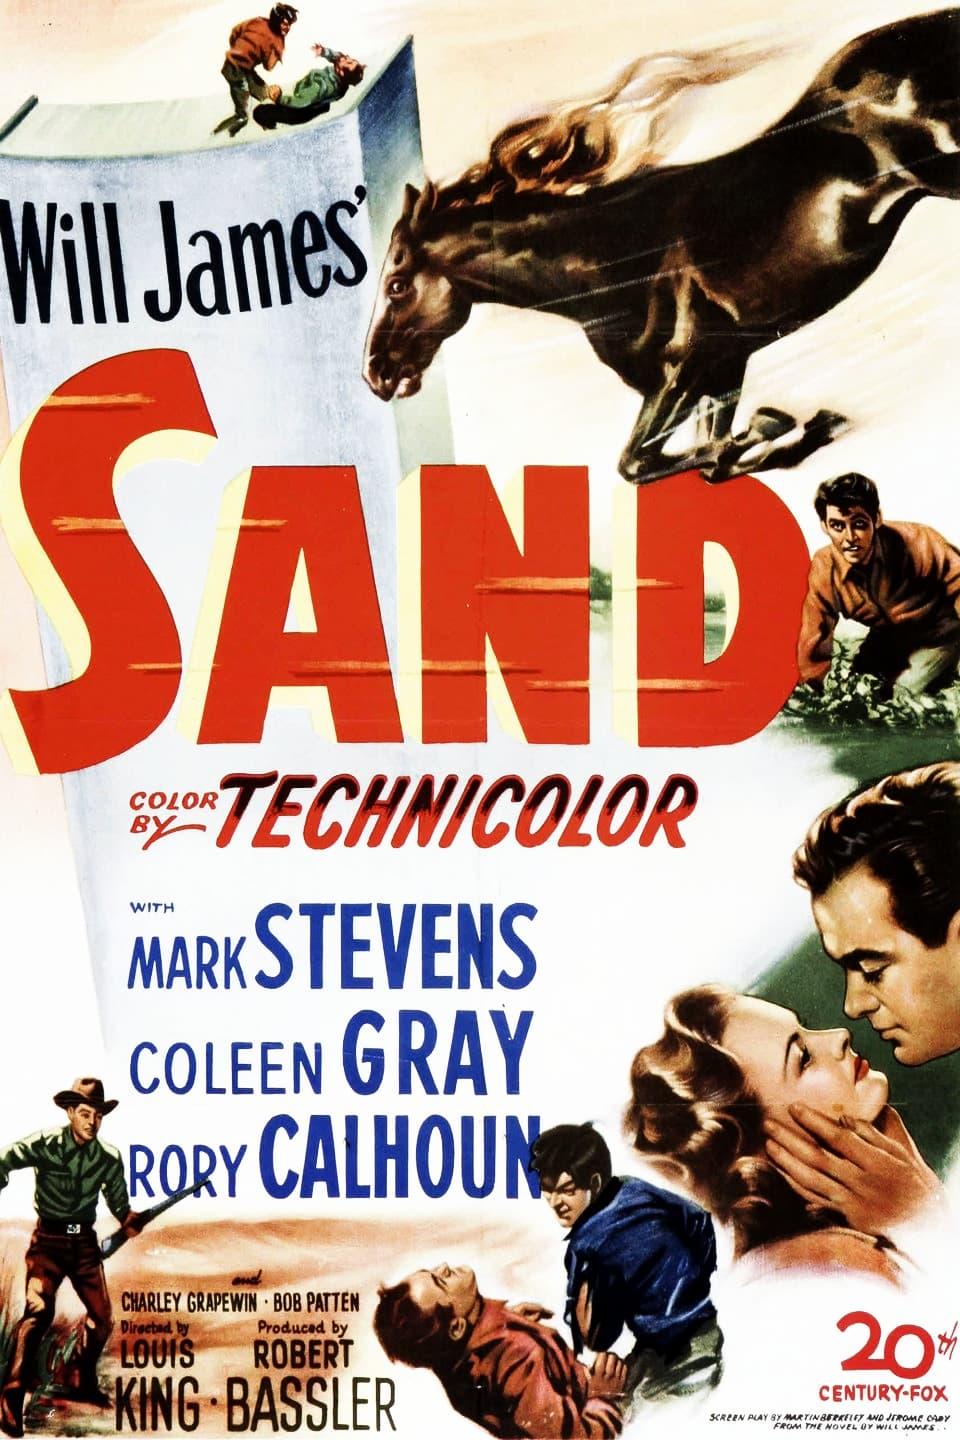 Sand poster